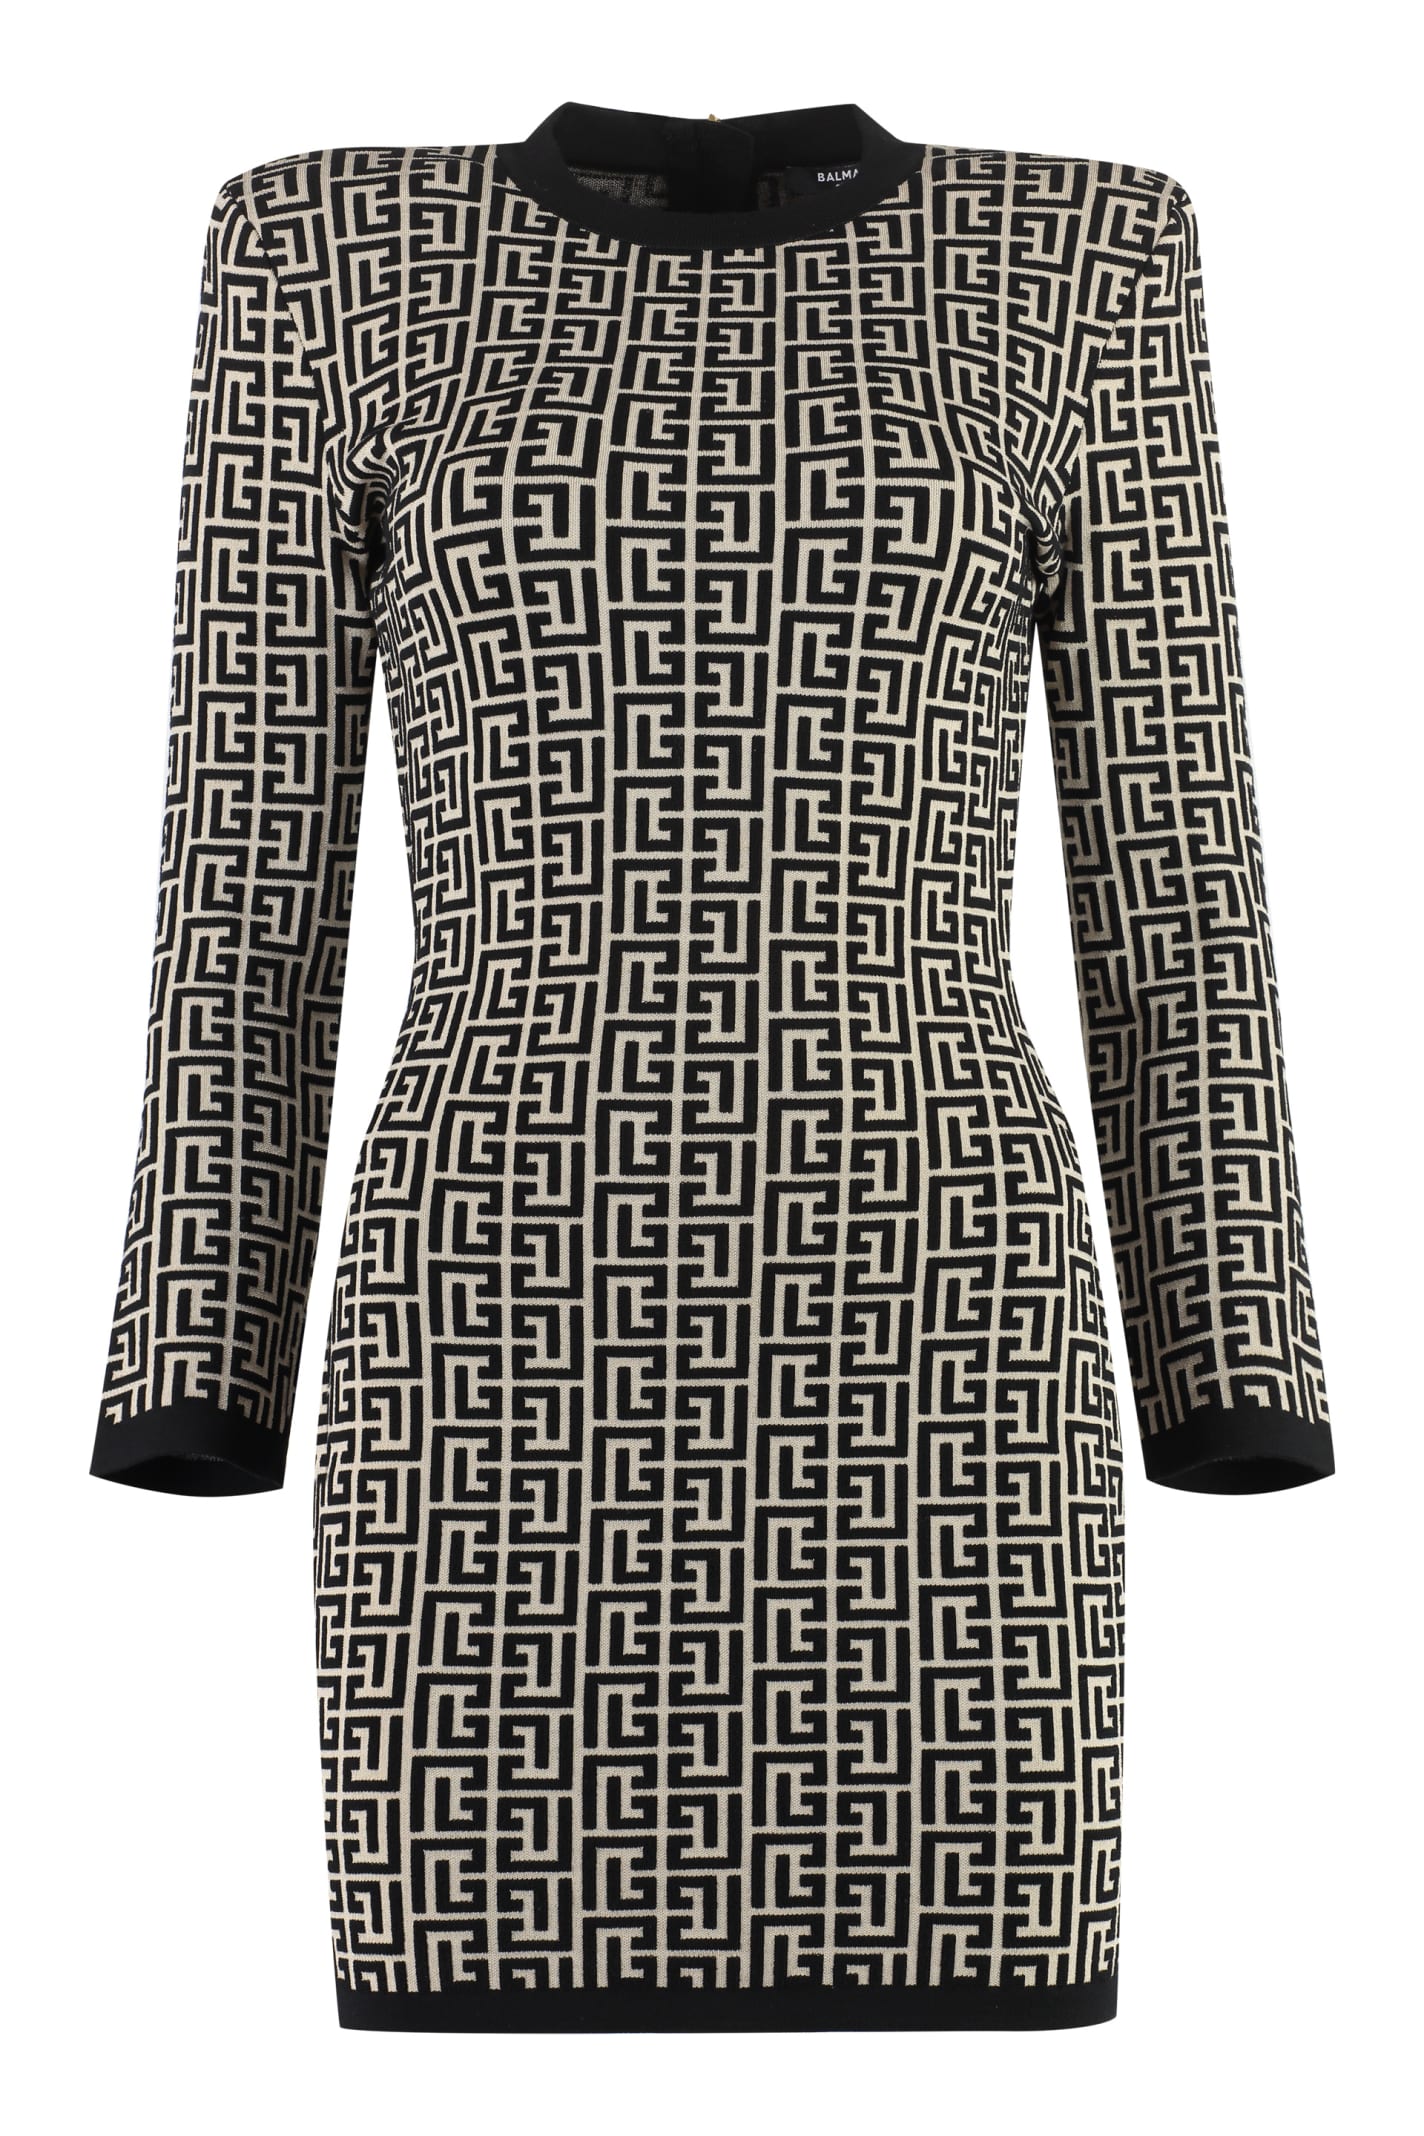 Balmain Geometric Jacquard Wool Dress